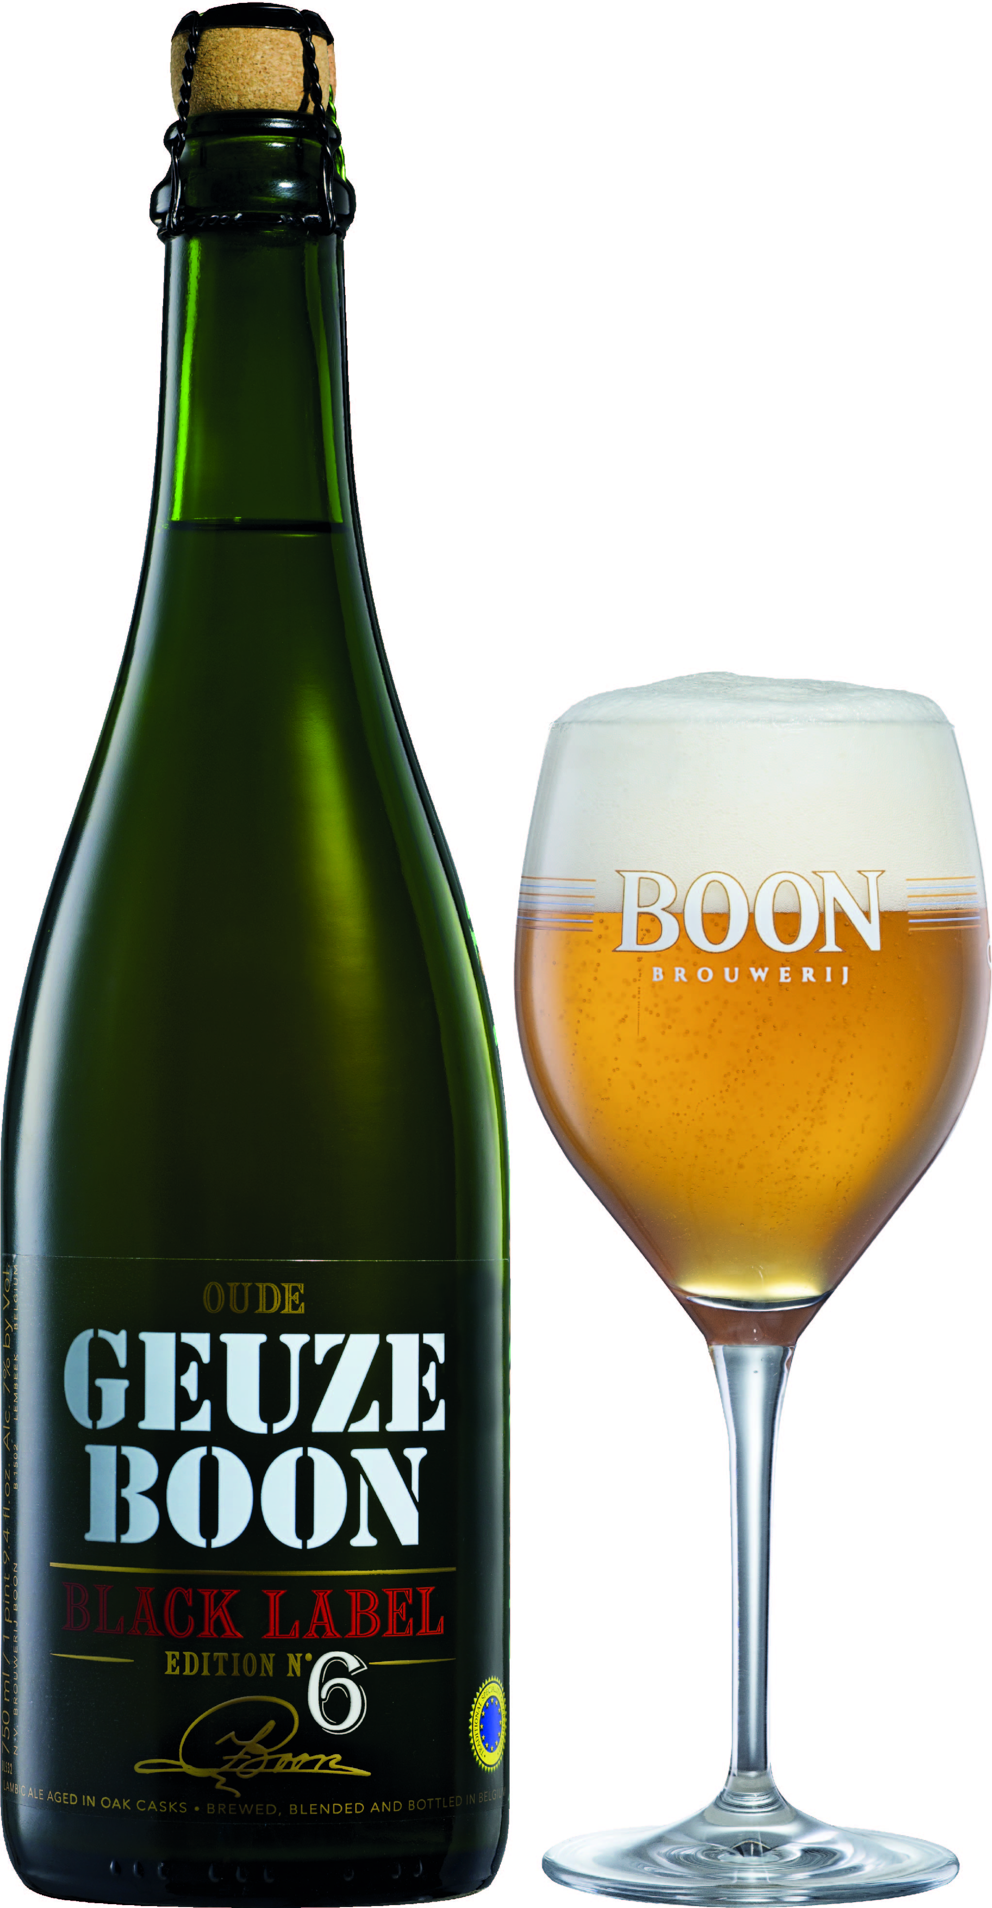 Boon Oude Geuze Black Label Edition N°6 wint goud op Brussels Beer Challenge 2021